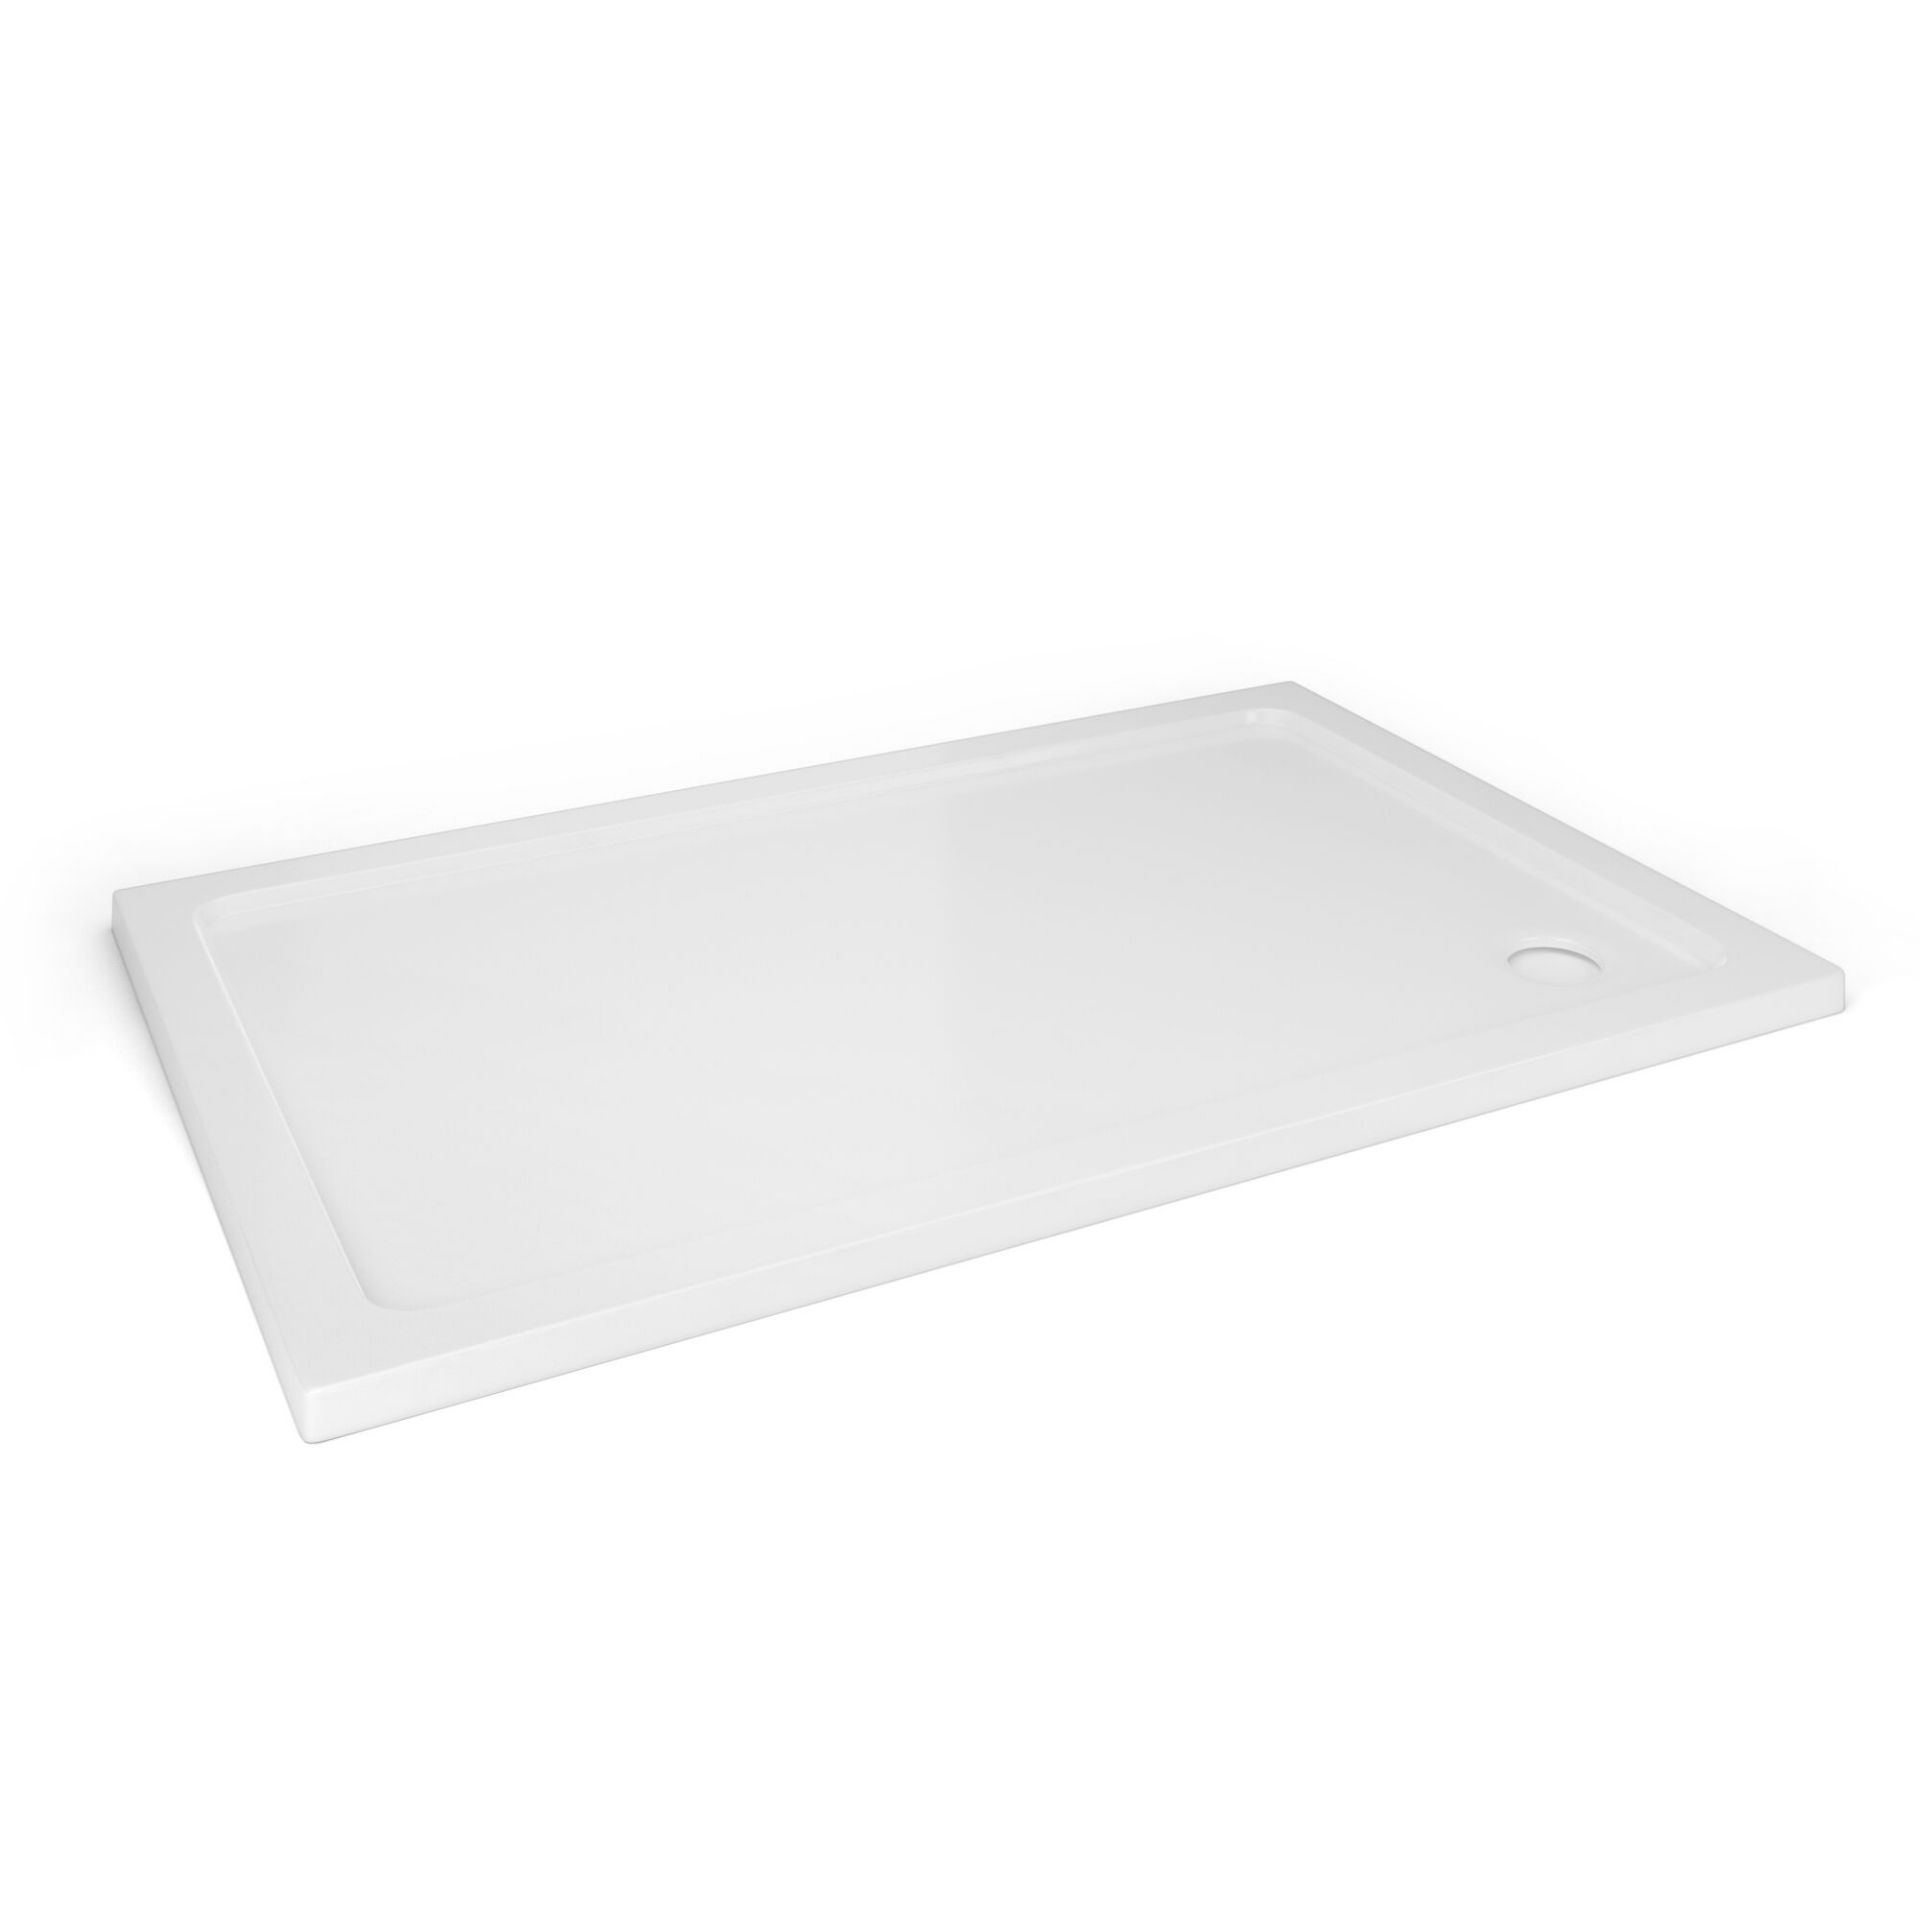 (EY35) 1400x900mm Rectangular Ultra Slim Stone Shower Tray. Low profile ultra slim design Gel coated - Image 2 of 2